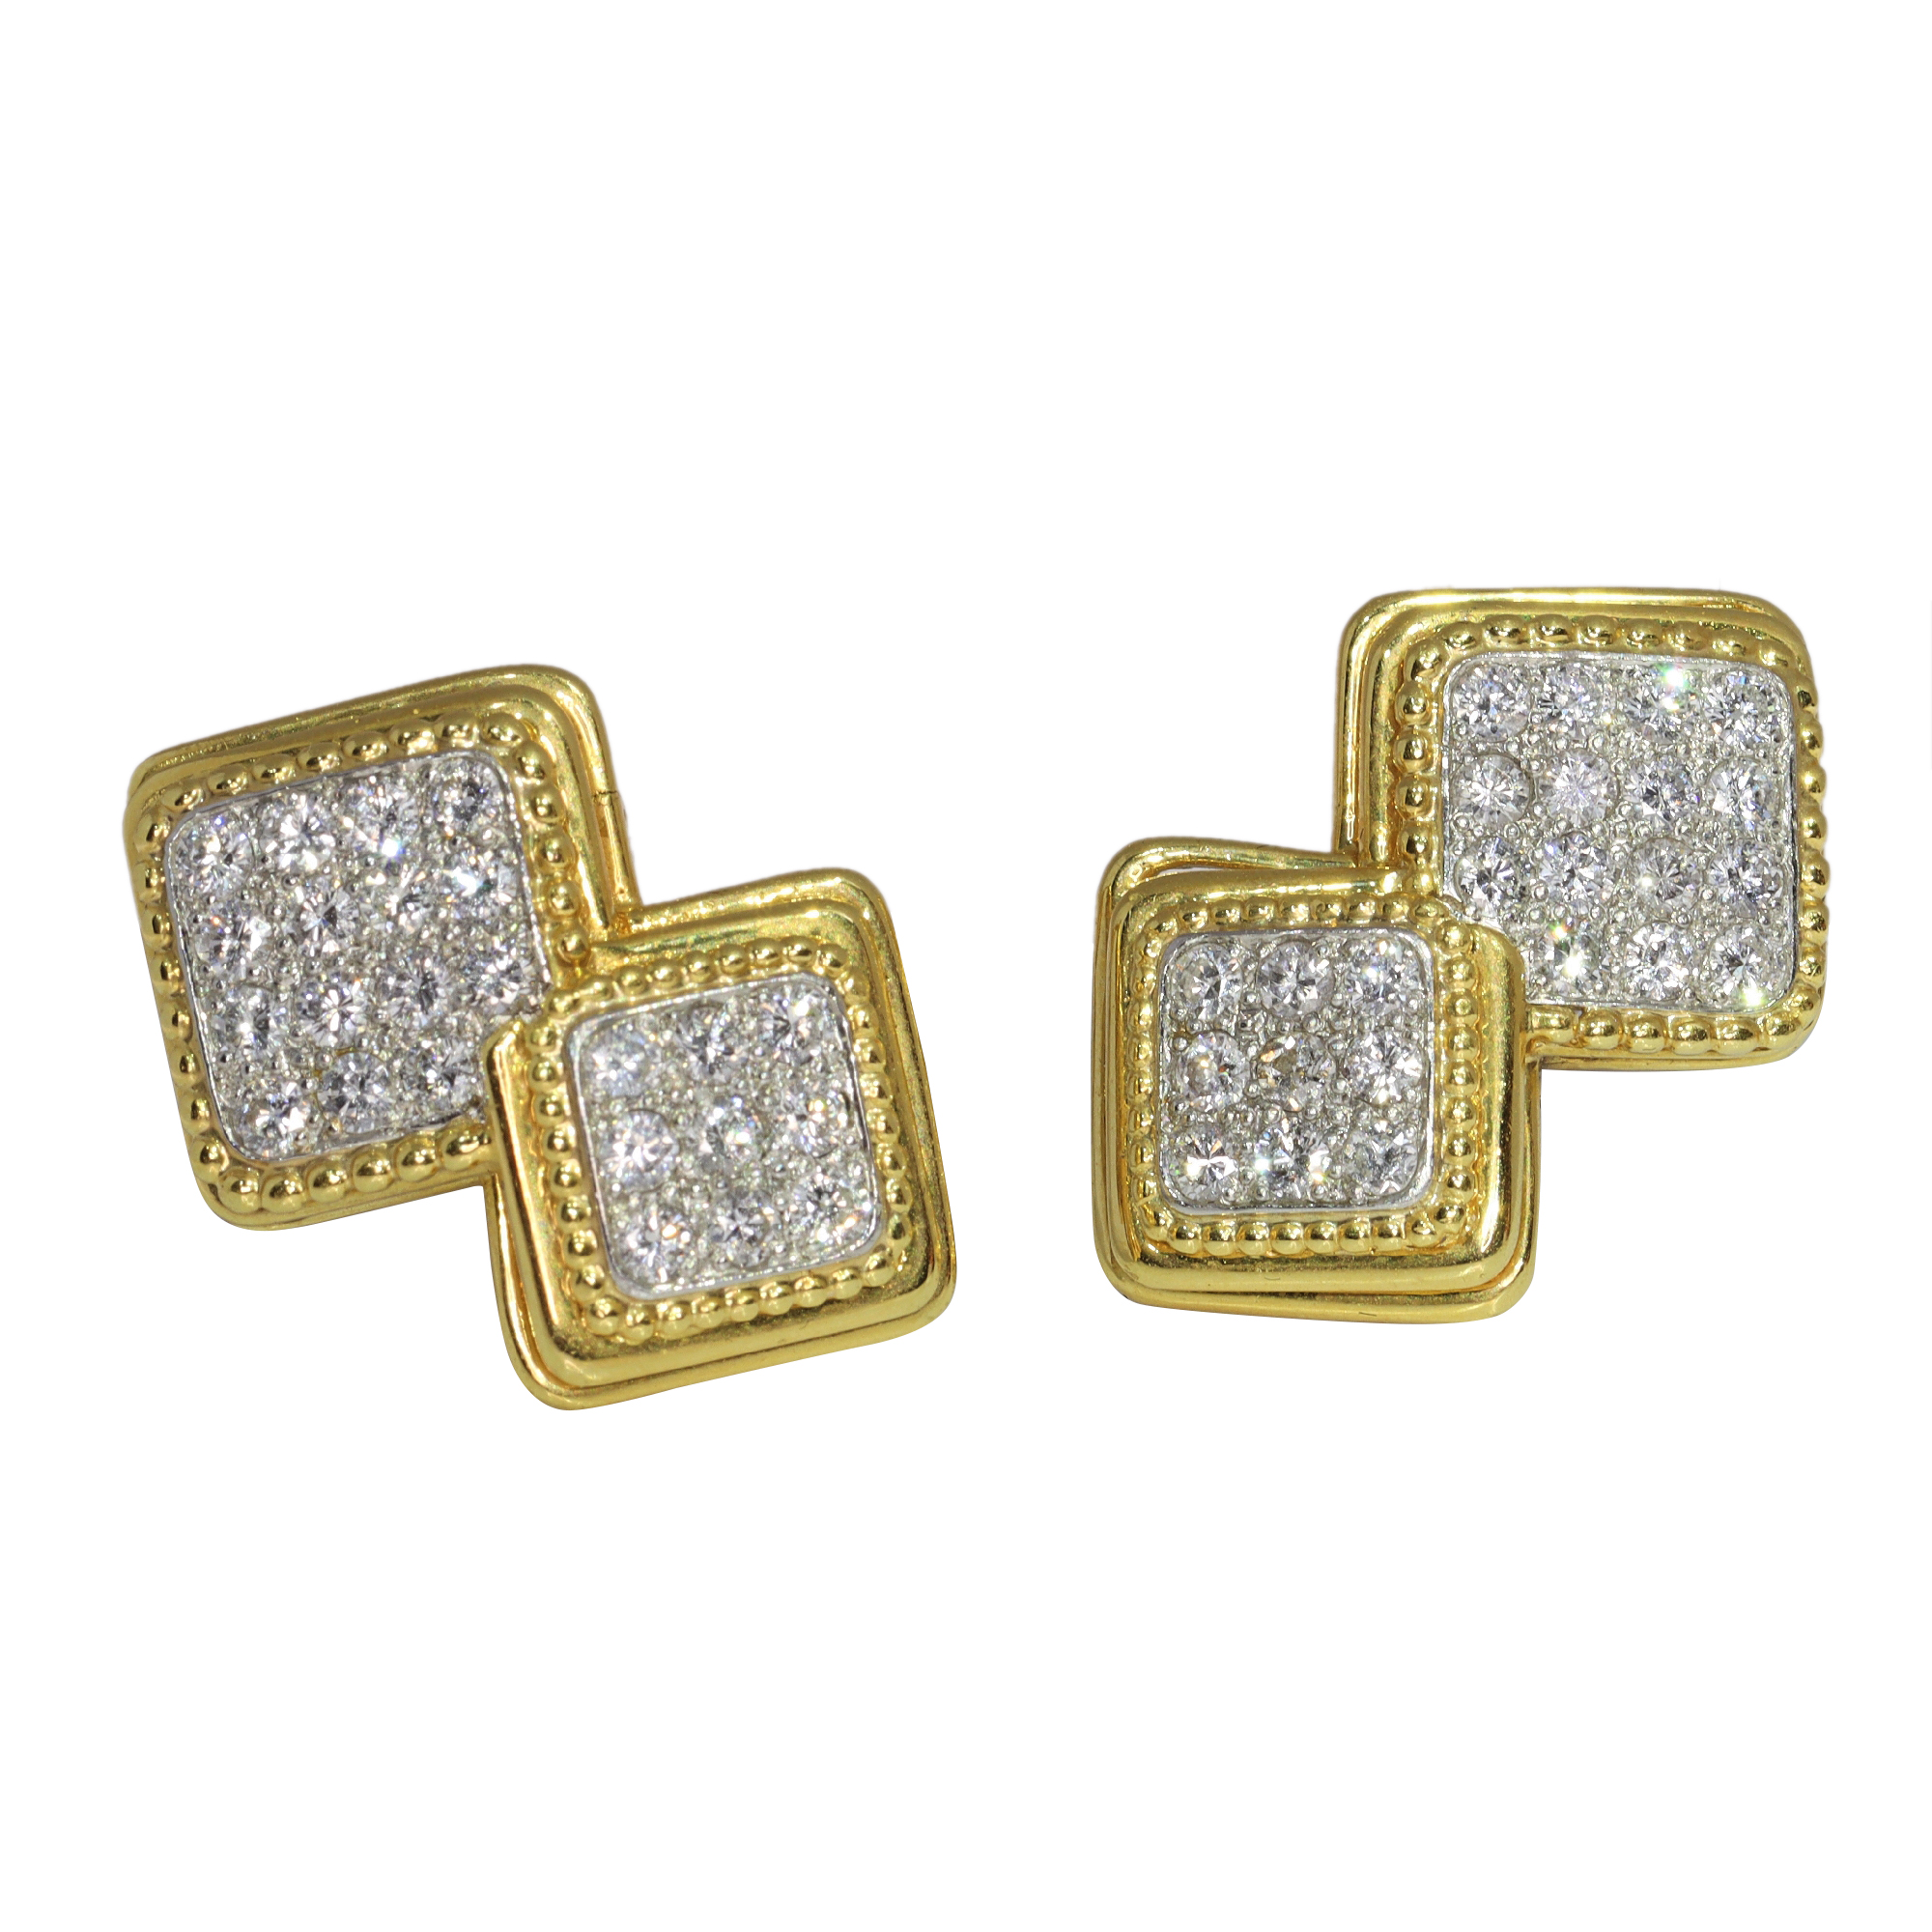 1950s Parisian Elegance: Boucheron's Gold and Diamond Earclips